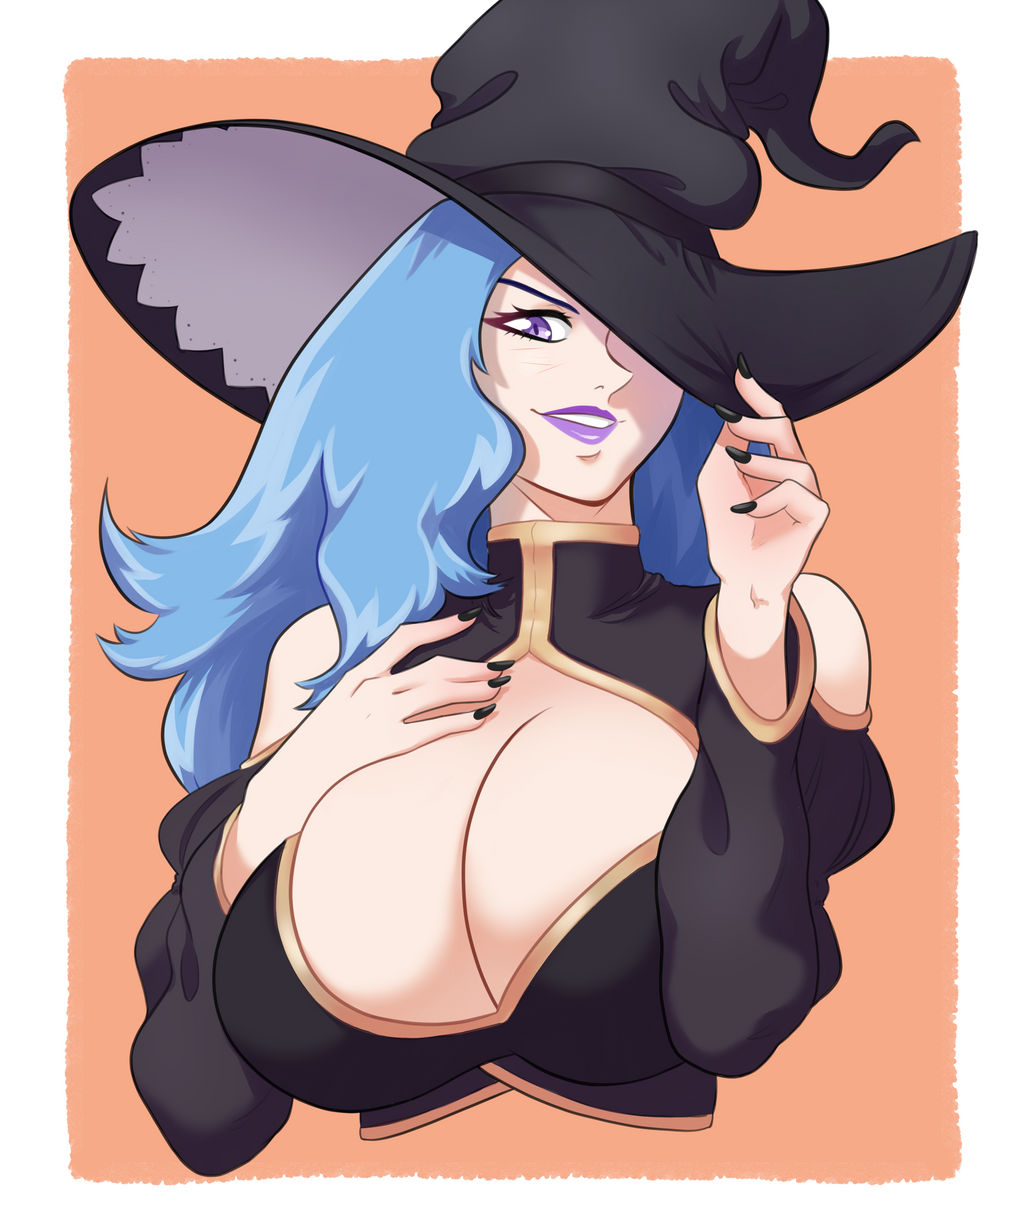 Big tits witch